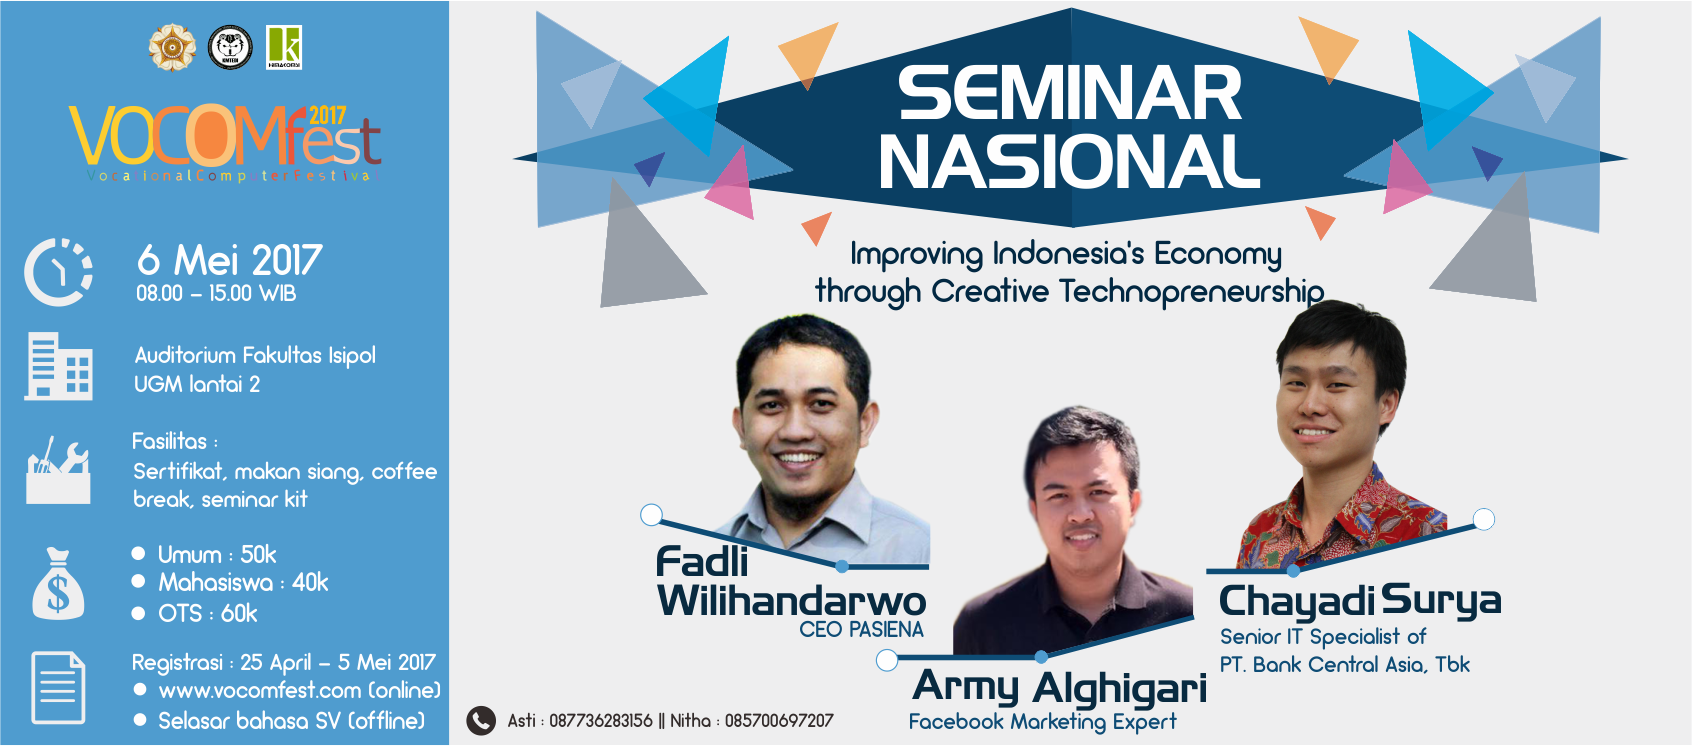 Poster Vocomfest 2017 "Improving Indonesiaâ€™s Economy Through Creative Technopreneurship"